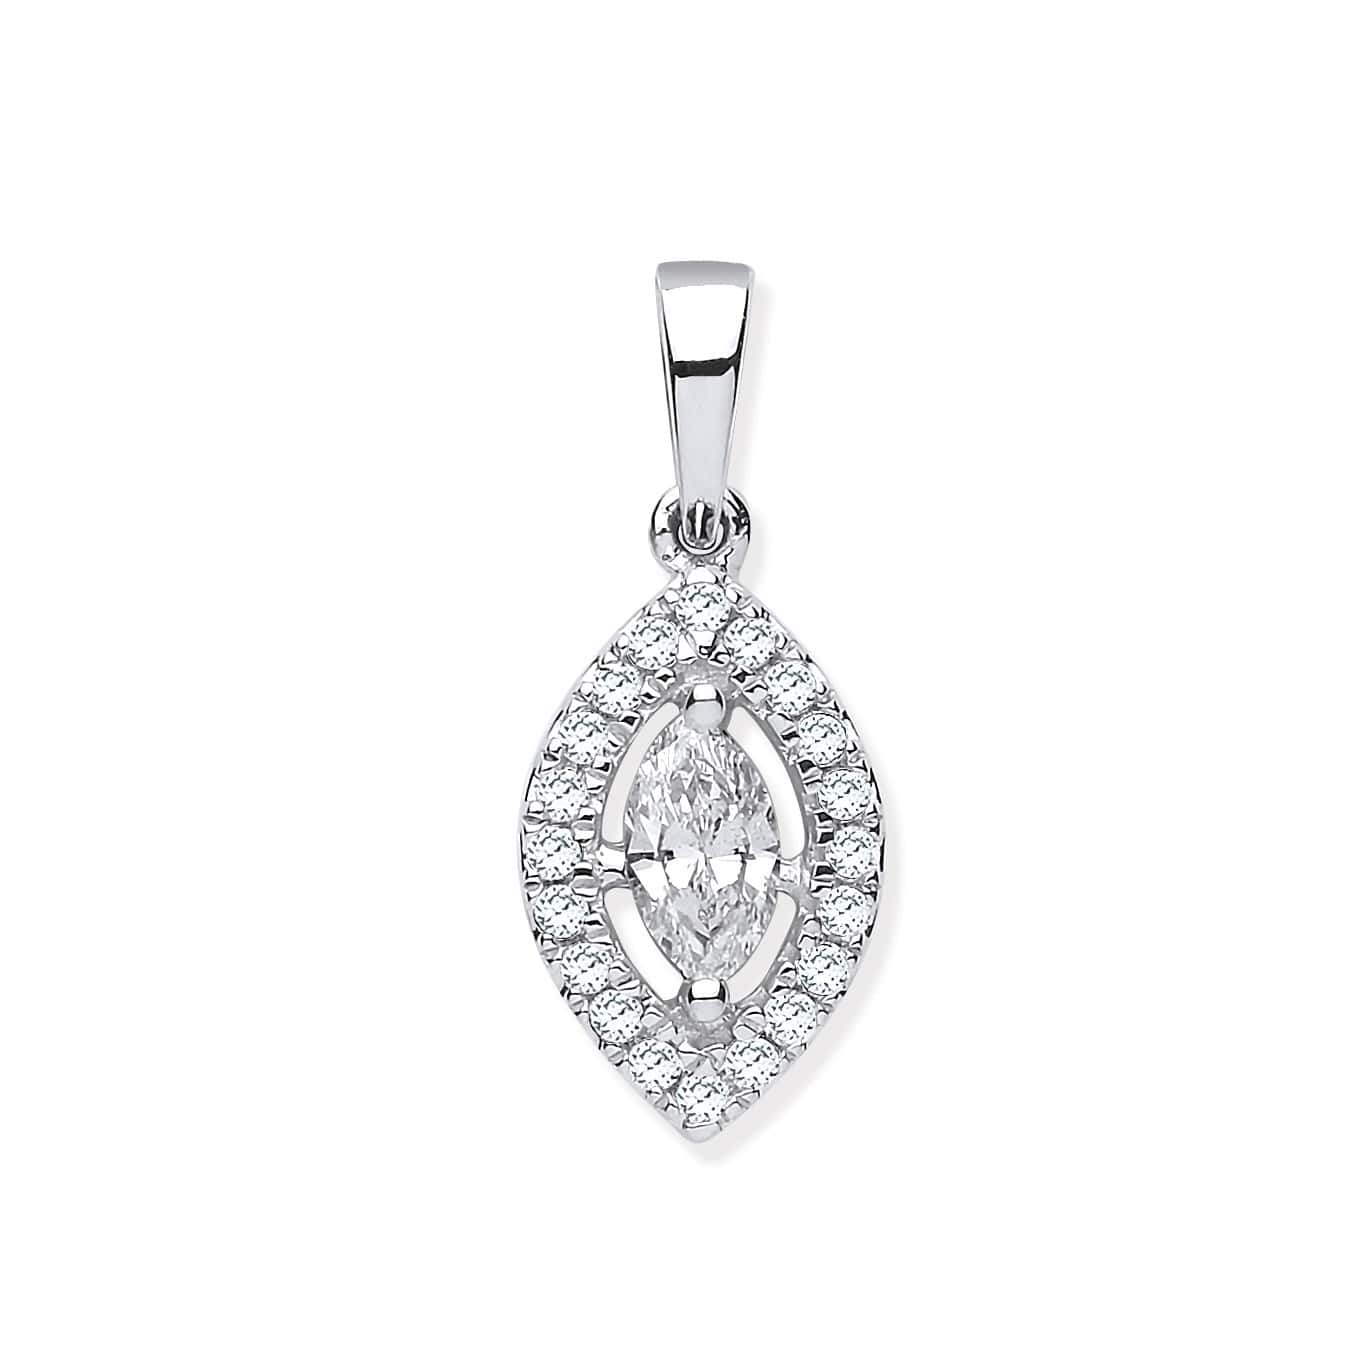 0.40 Carat Marquise Shaped Diamond With Round Diamond Set Pendant